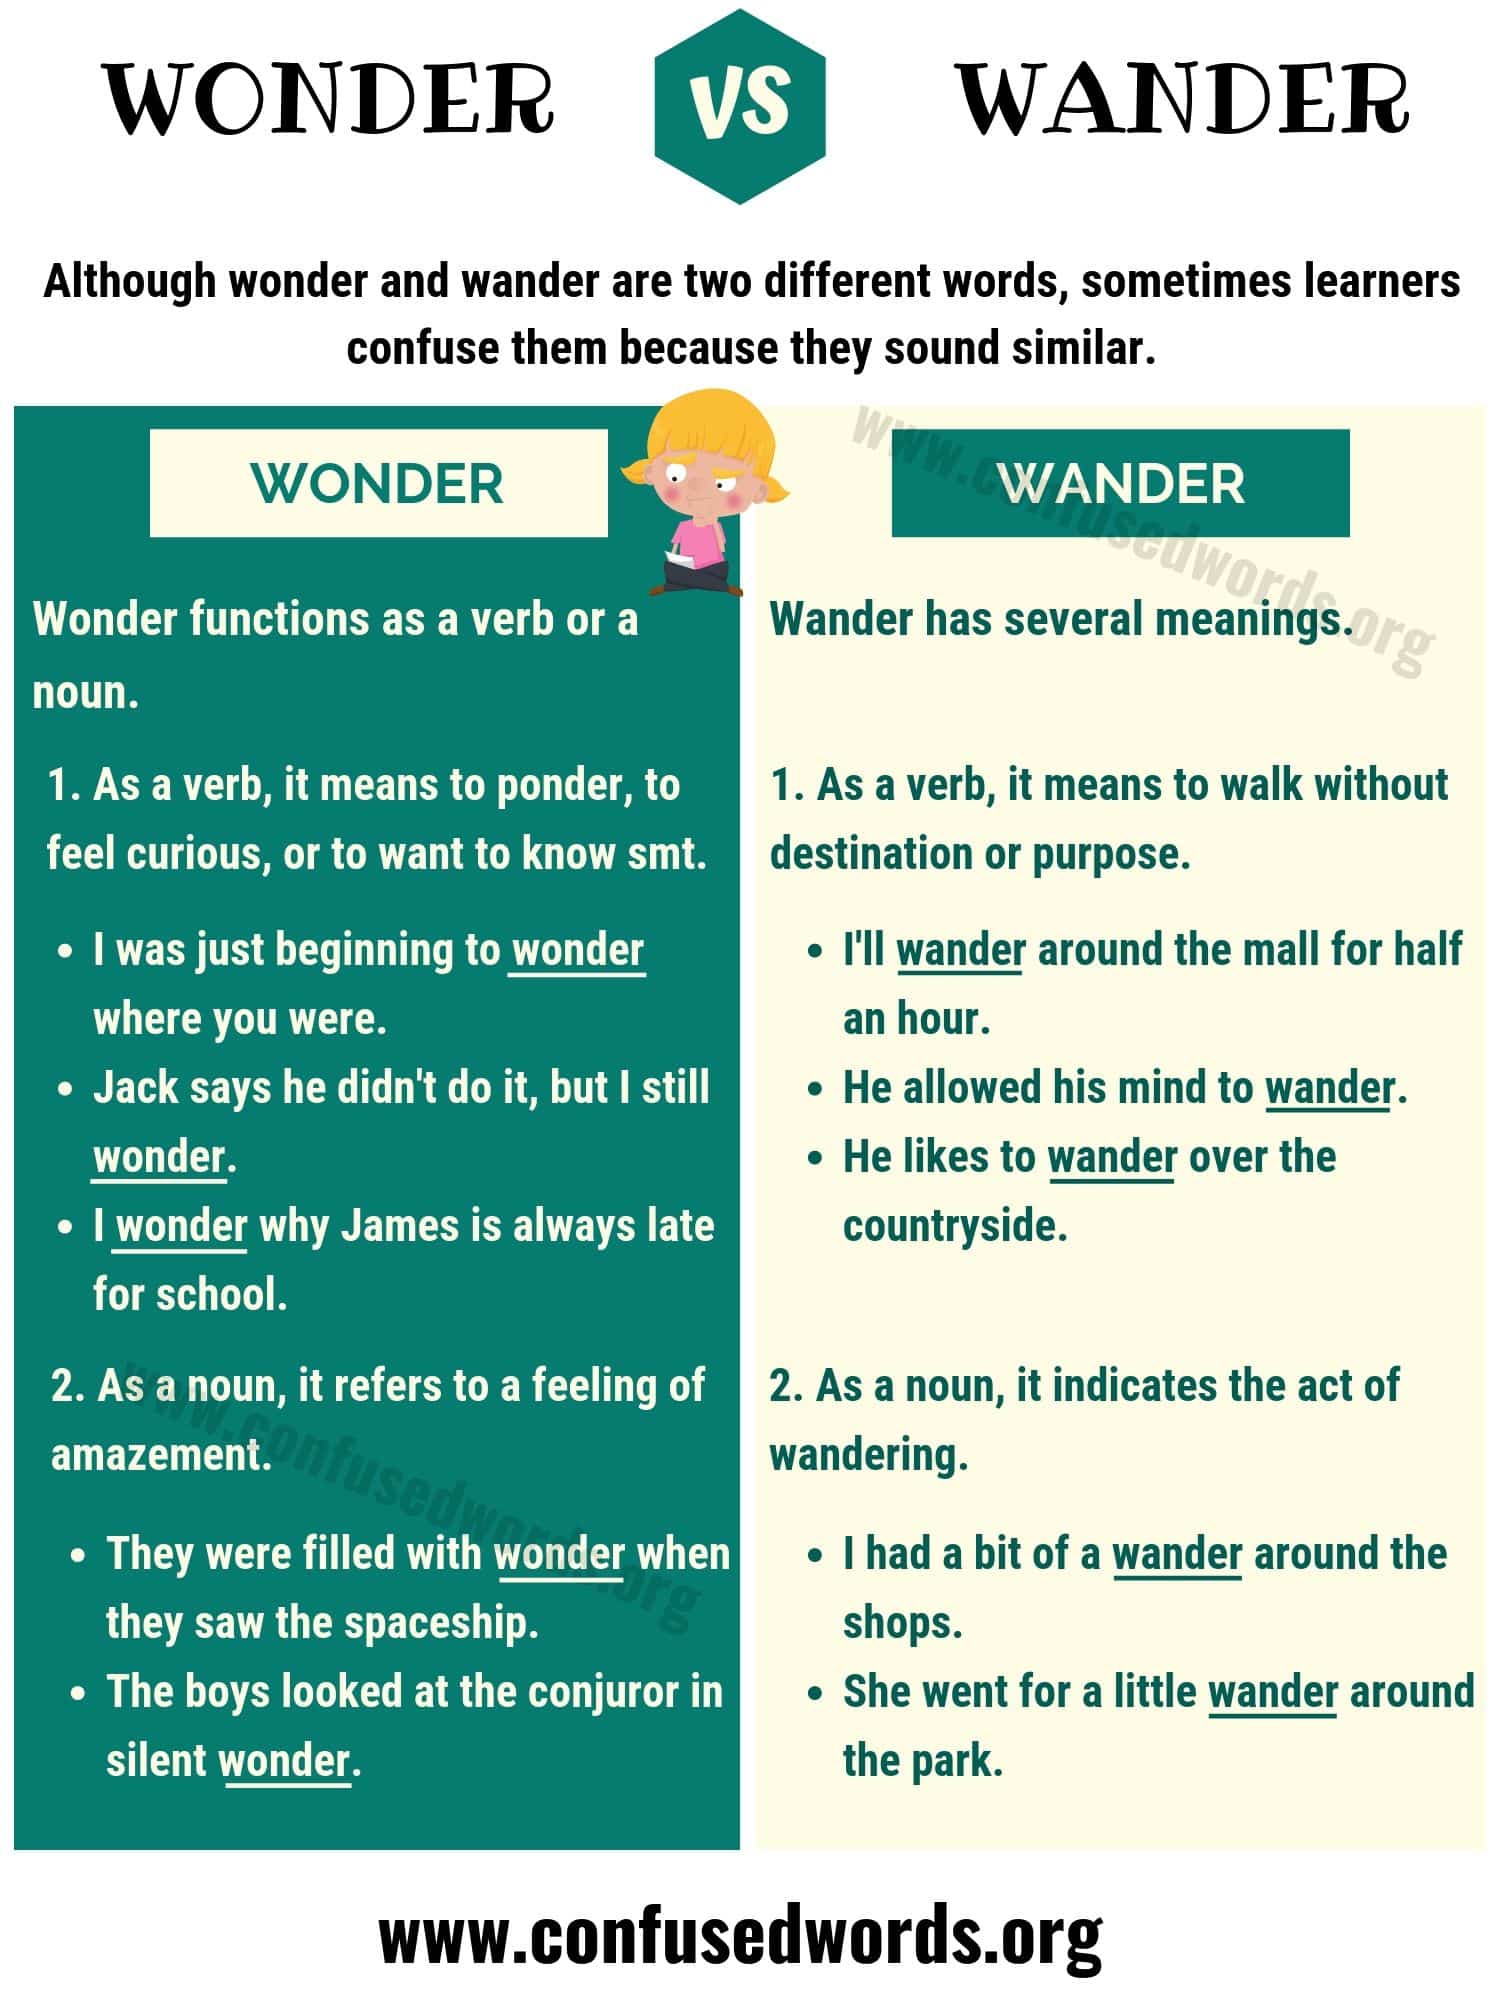 Wonder vs Wander